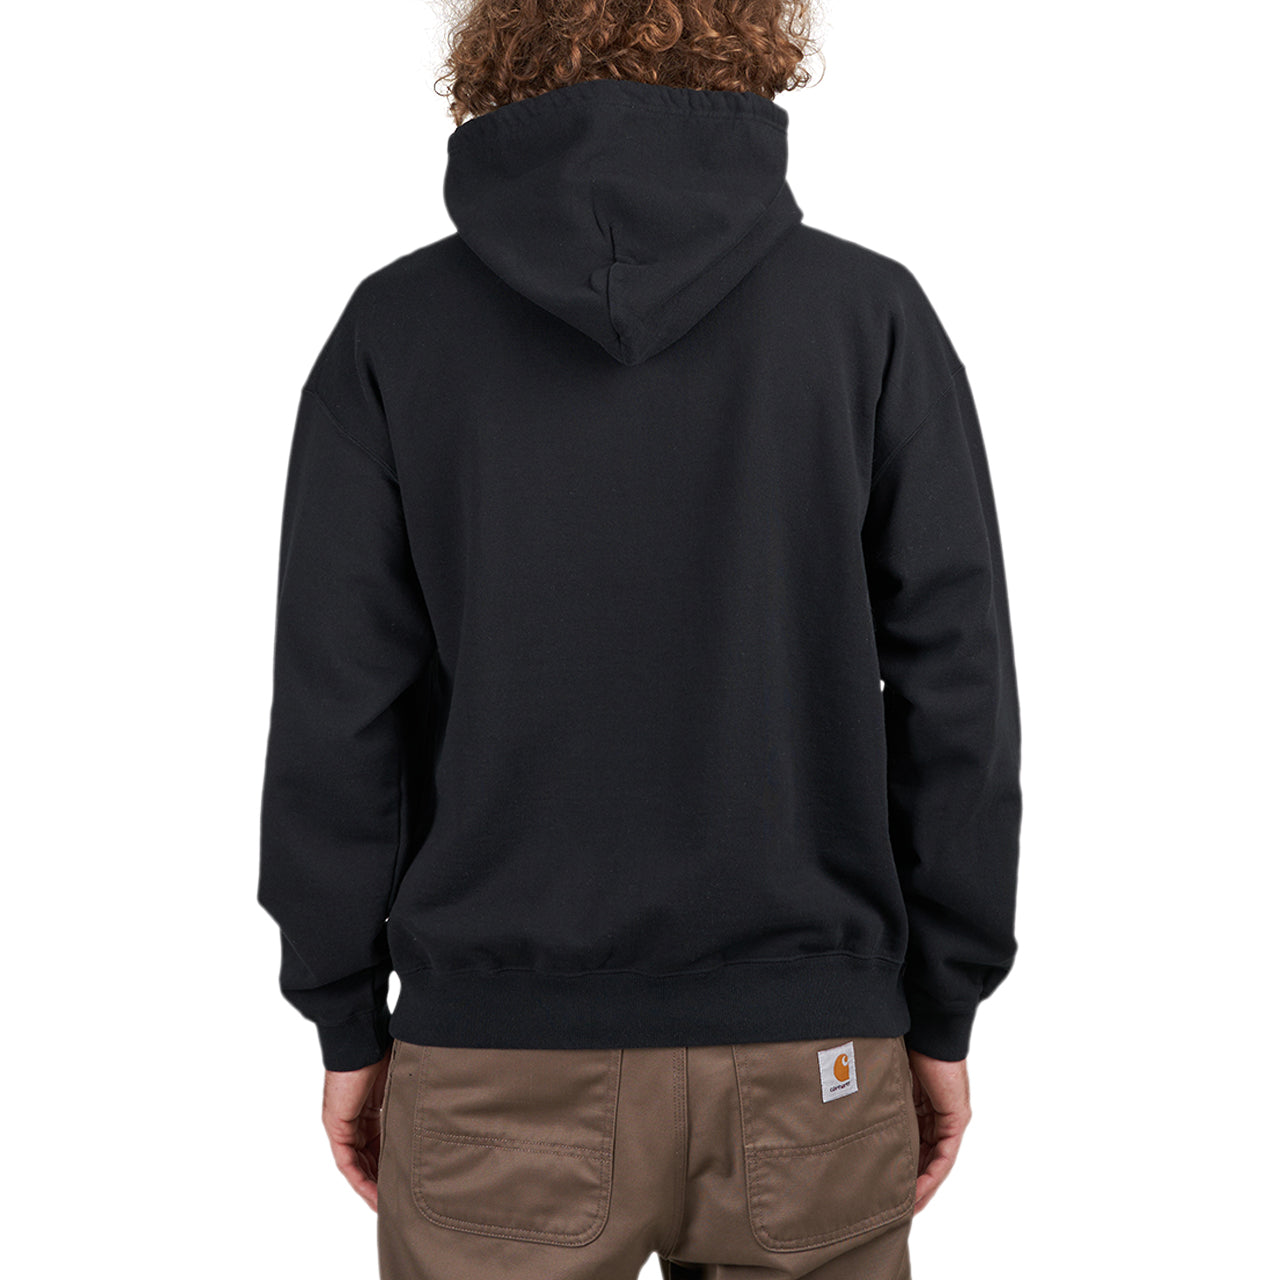 Neighborhood College Hooded Sweatshirt (Schwarz / Weiß)  - Allike Store